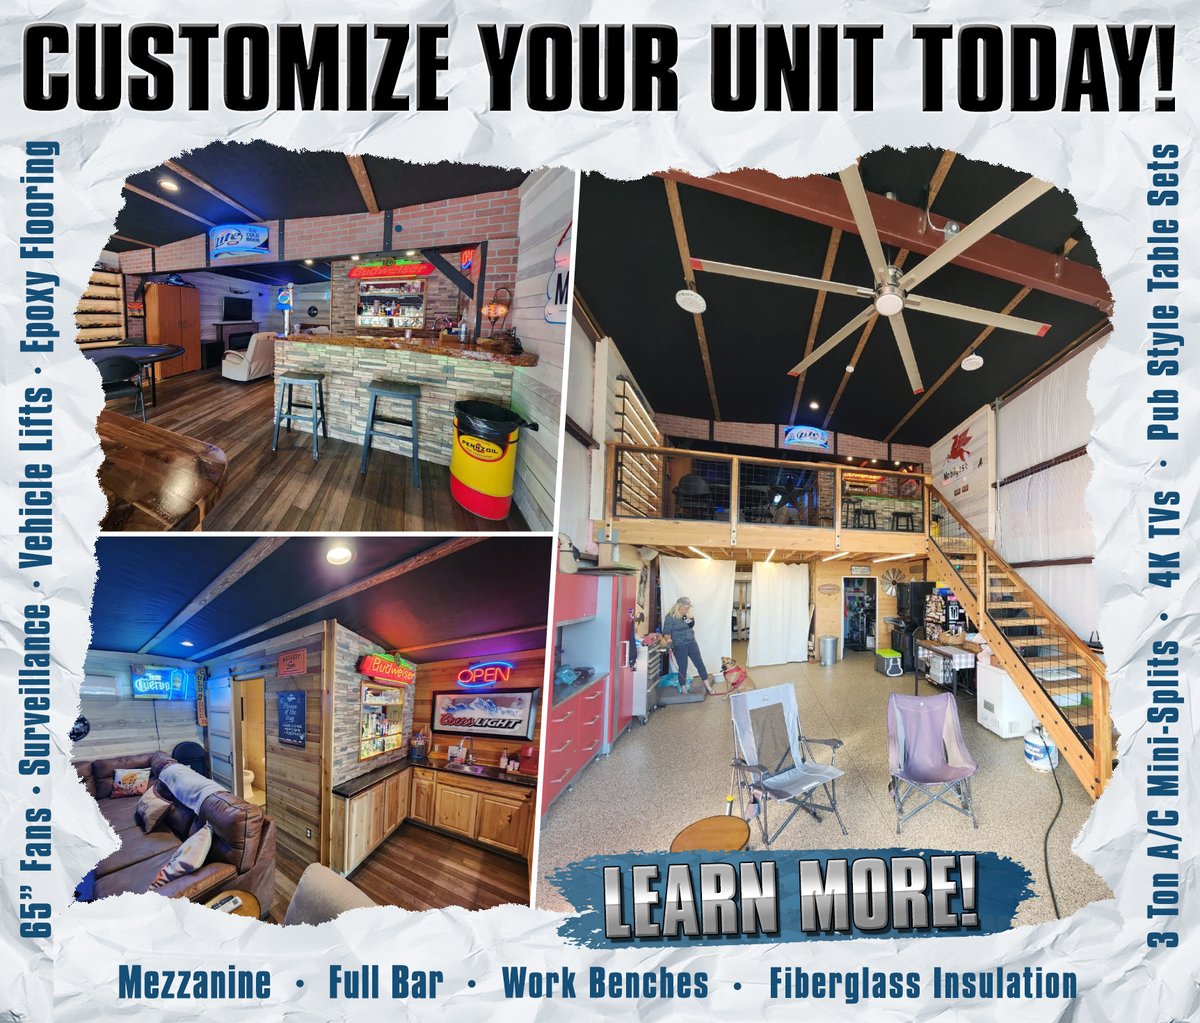 Custom Build Your Unit Today! For More Information Visit RiverboundCustomStorage.com